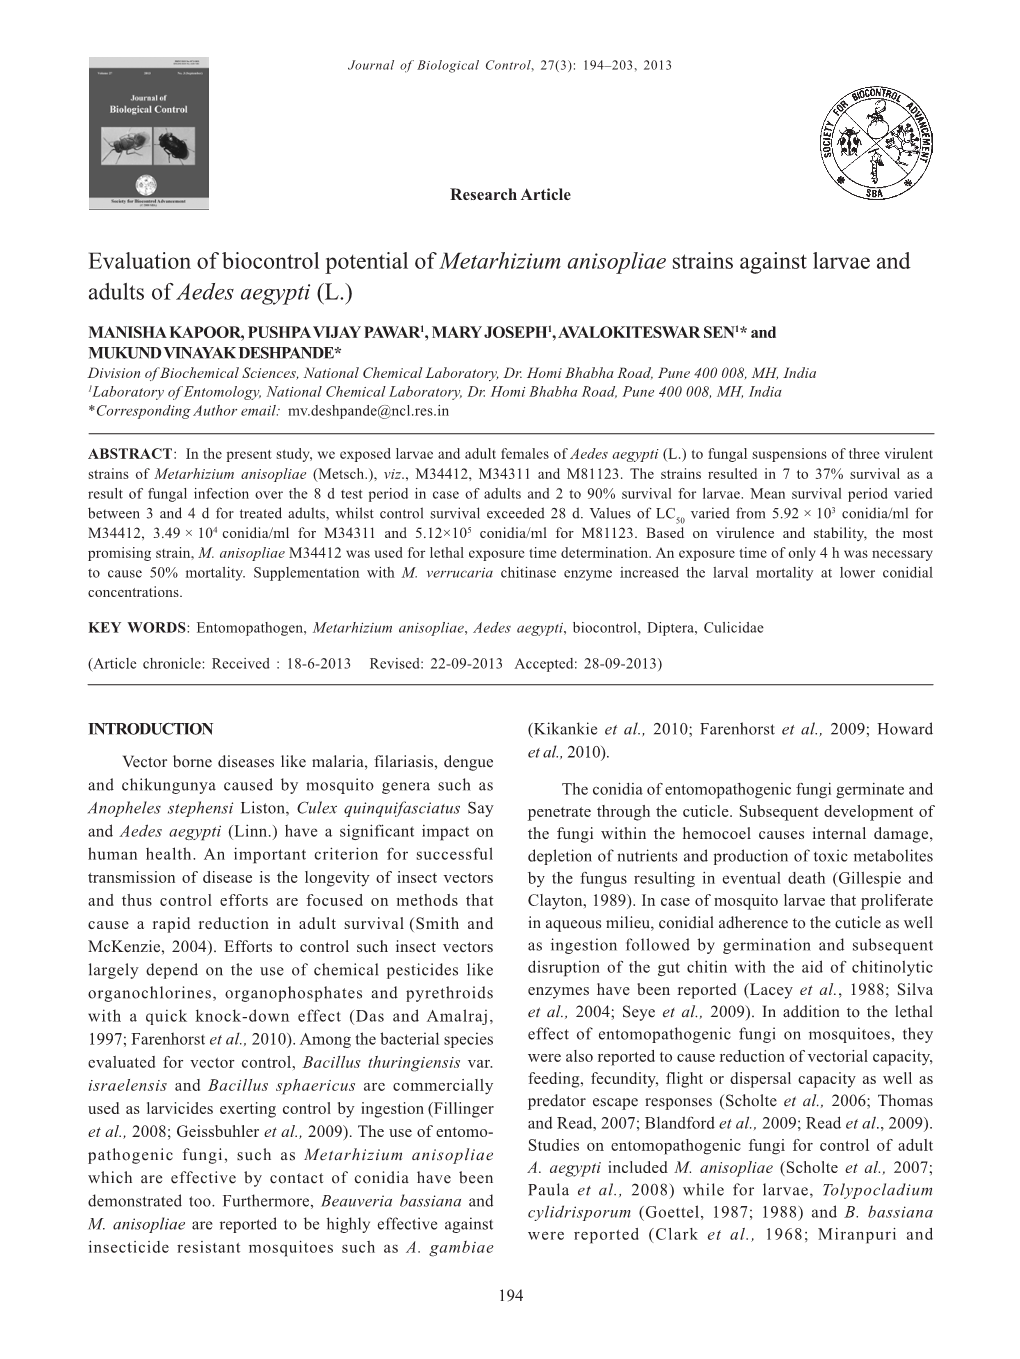 Evaluation of Biocontrol Potential of Metarhizium Anisopliae Strains Against Larvae and Adults of Aedes Aegypti (L.)